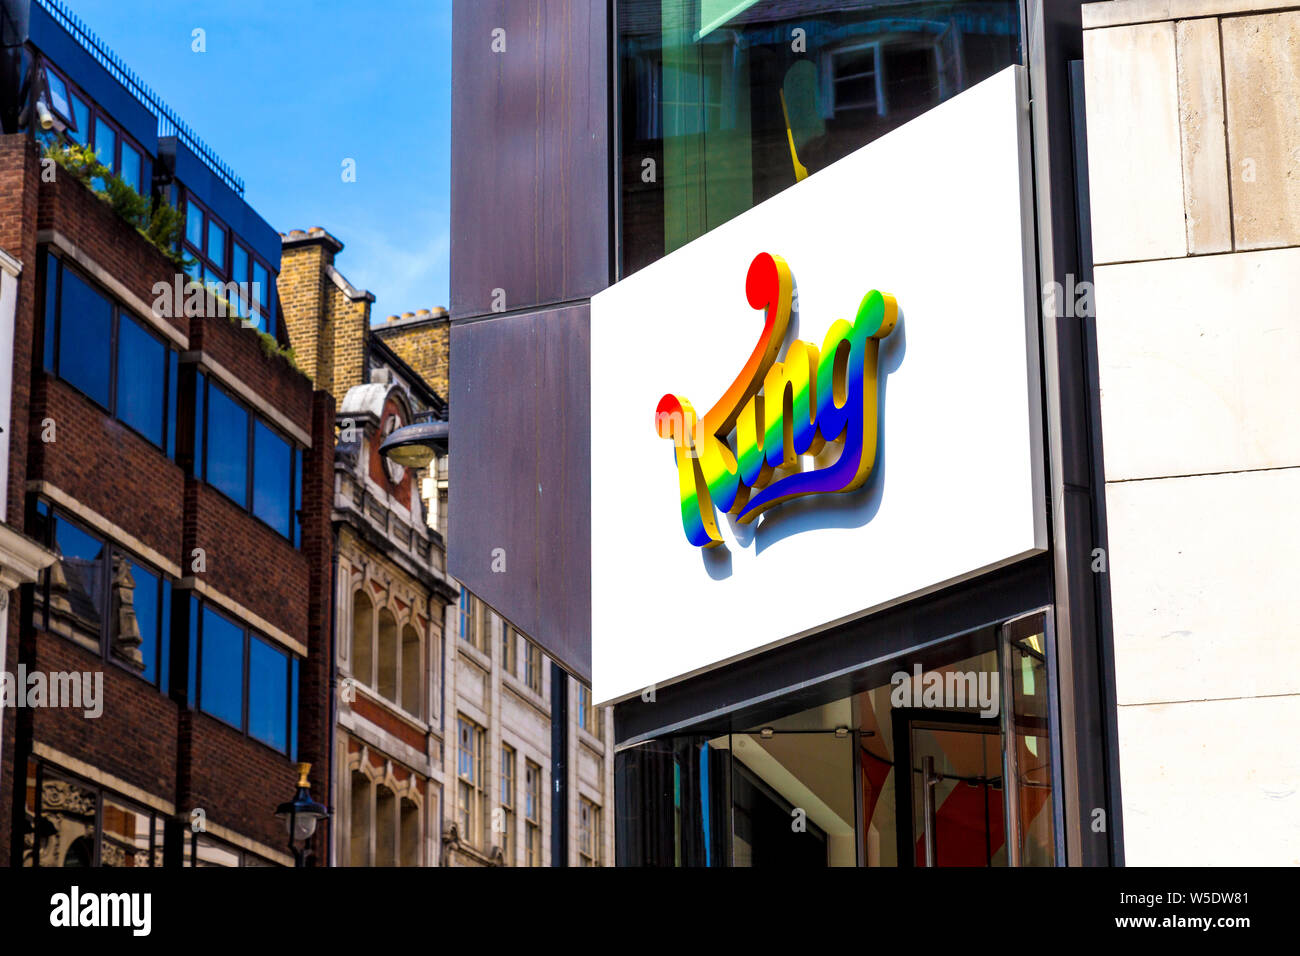 Vor dem Büro von König video game Entwickler Firma in Soho, London, UK Stockfoto